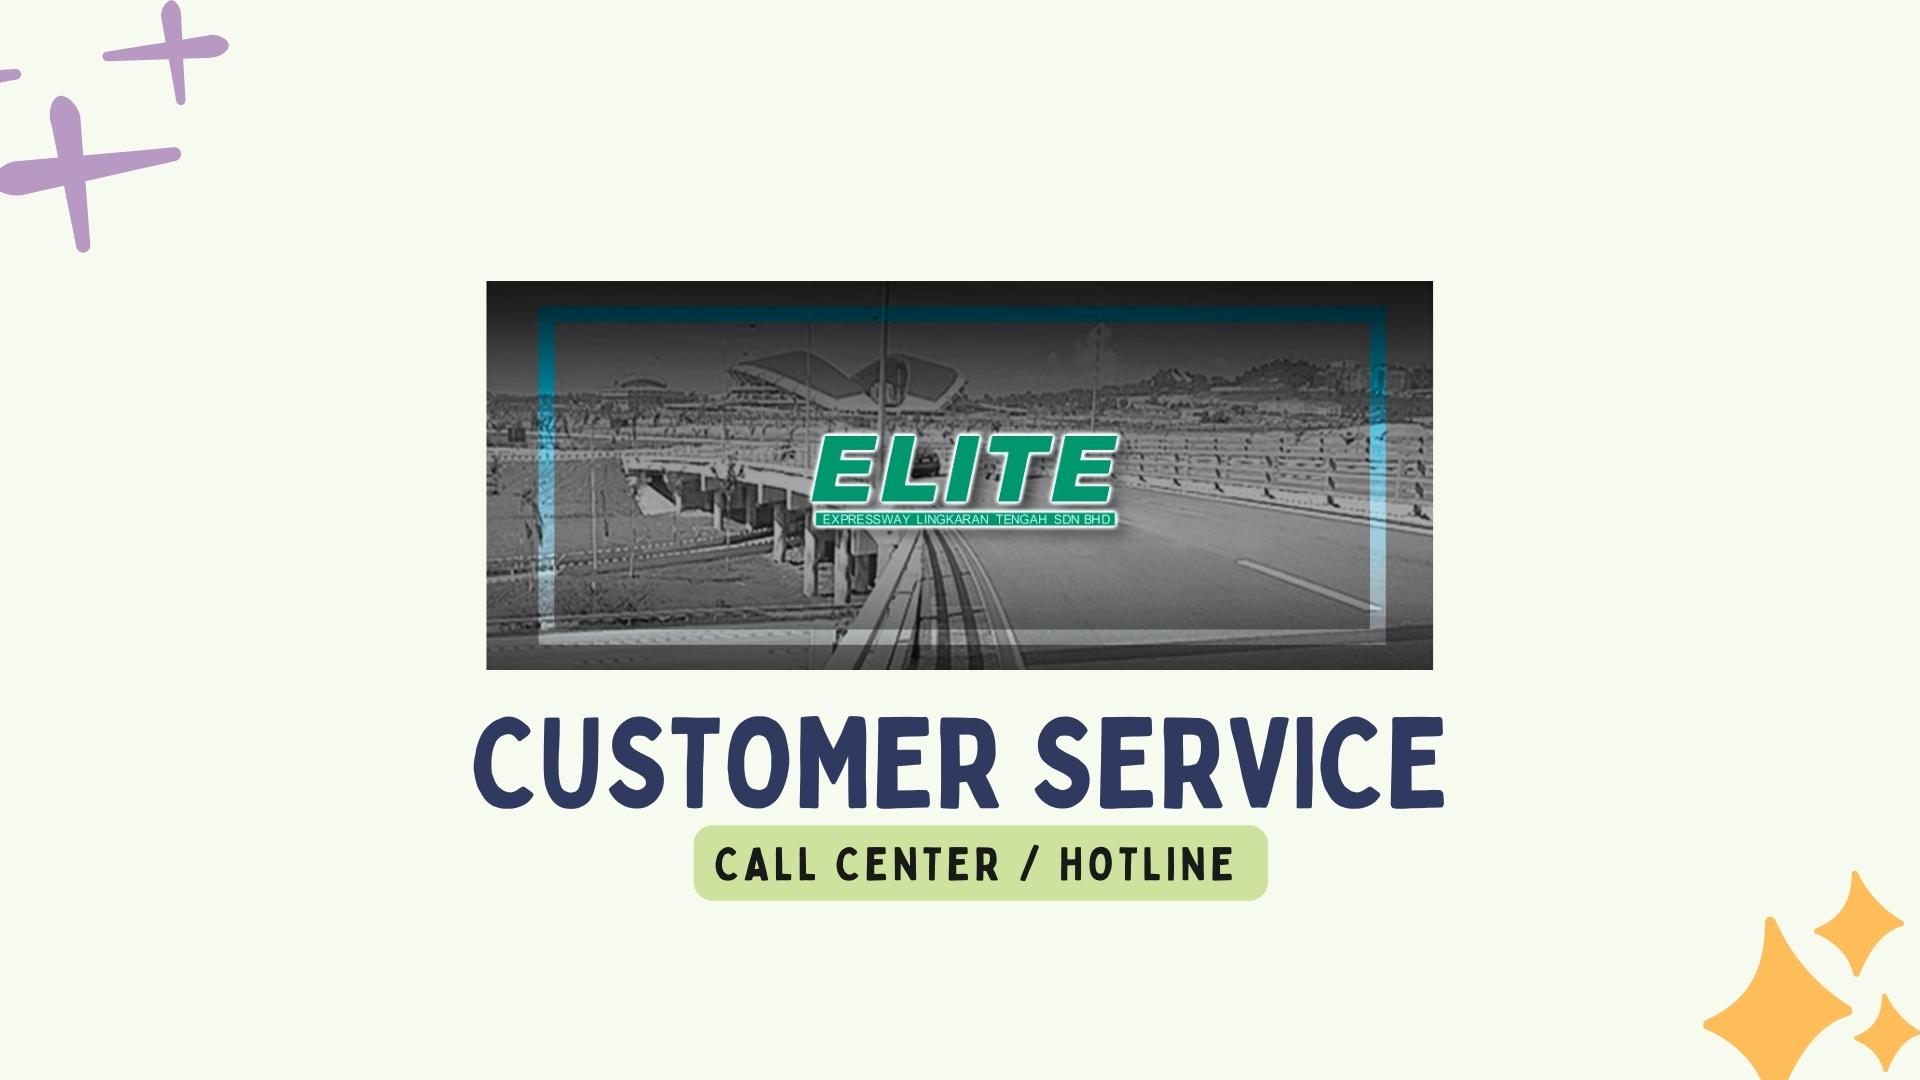 ELITE Highway Customer Service